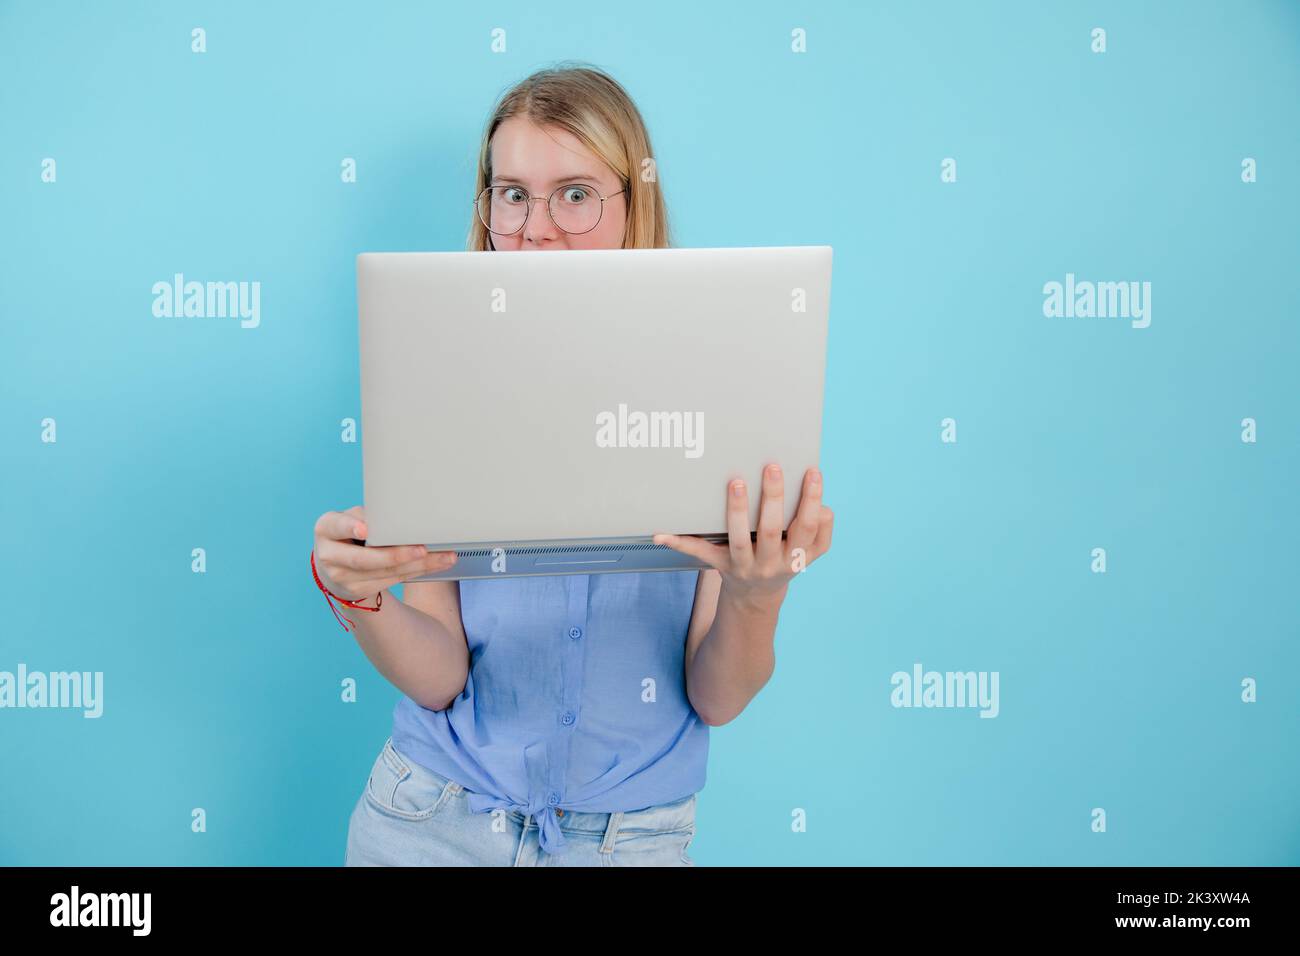 Portrait of shocked teenage girl with long hair wearing blue sleeveless shirt, holding laptop on blue background. Stock Photo